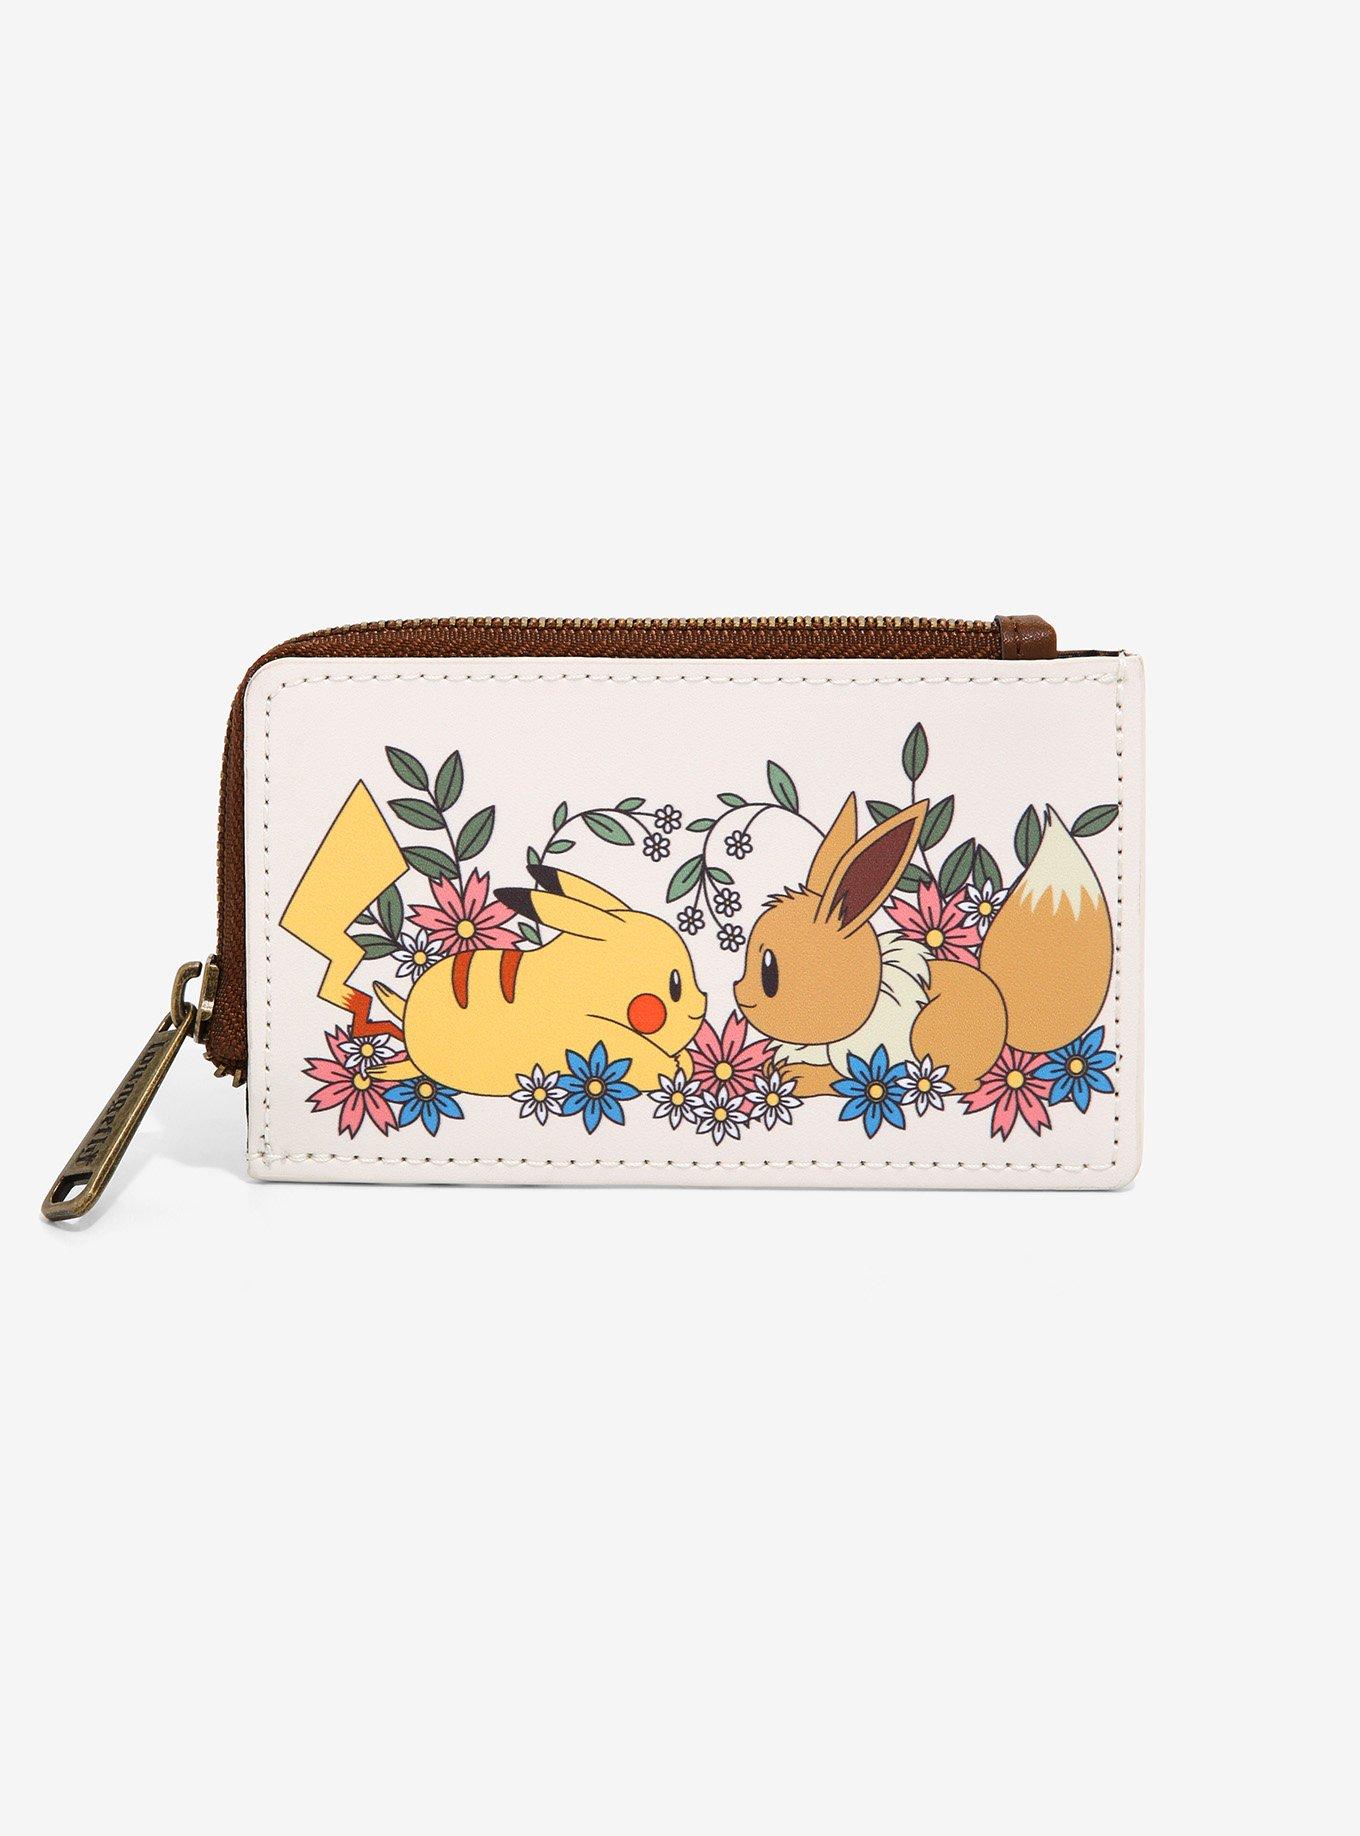 Loungefly Pokemon Pikachu & Eevee Floral Mini Backpack